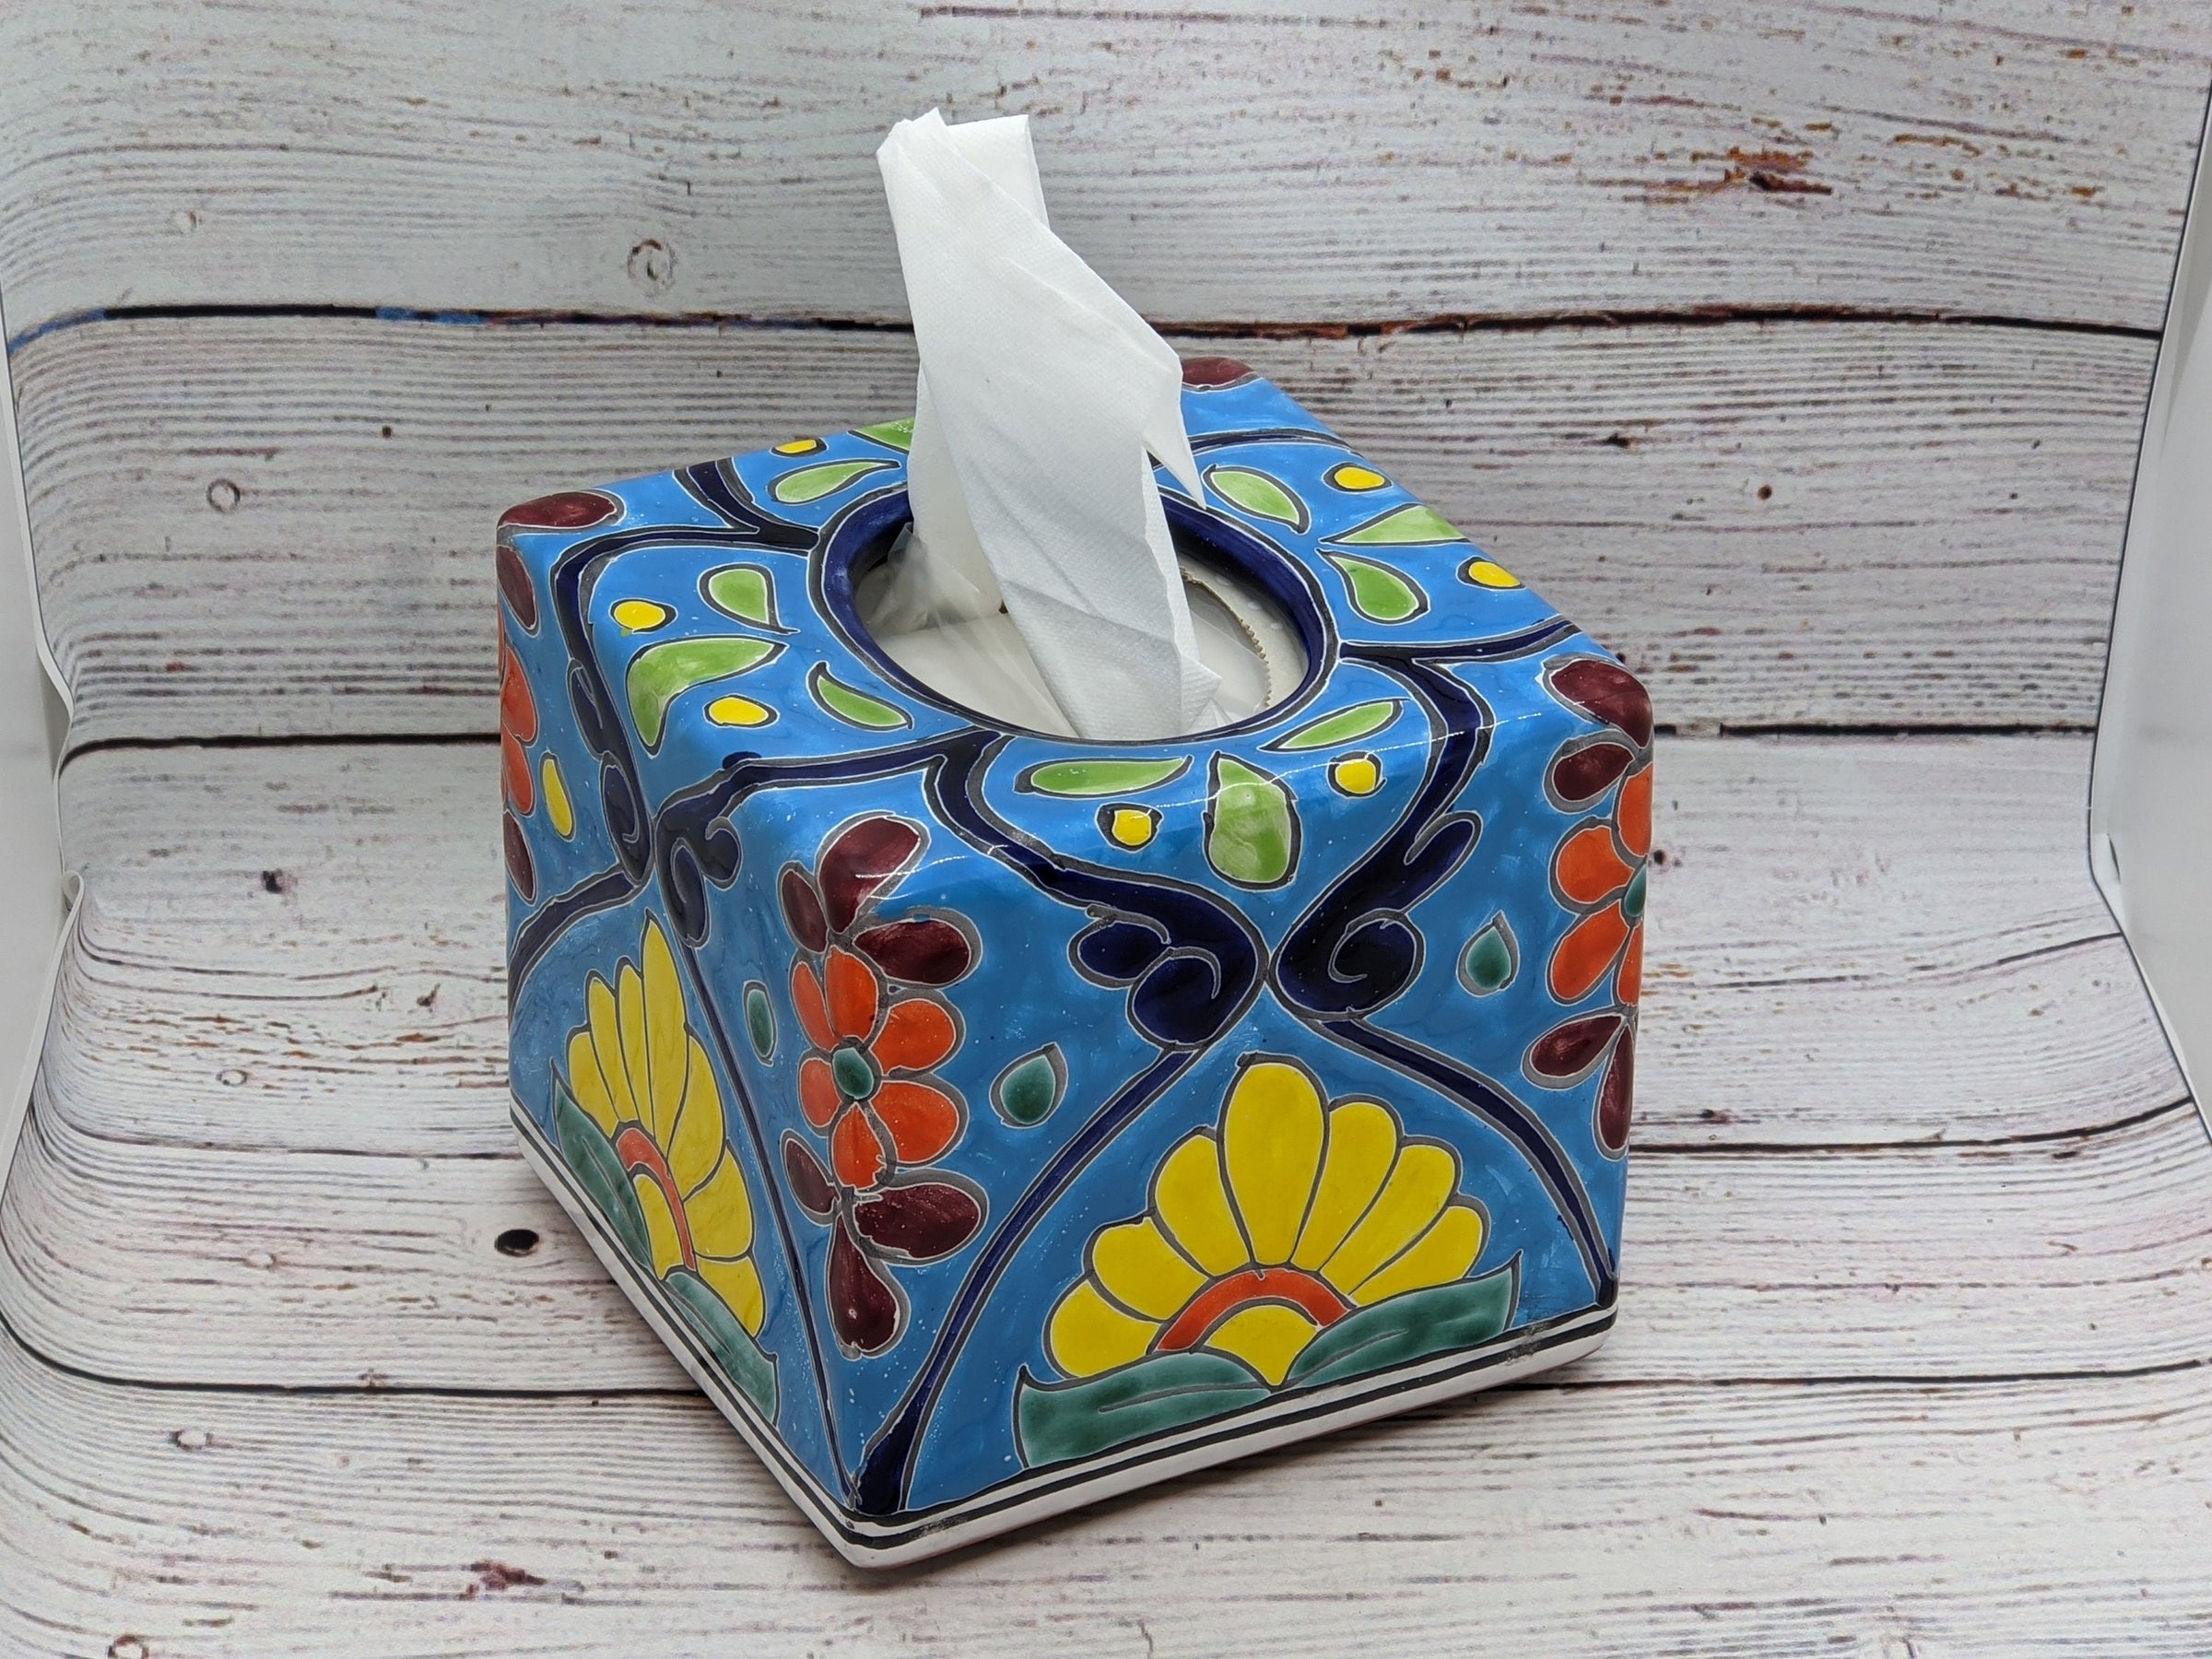 Talavera-Style Ceramic Tissue Box Cover, 'Talavera Flowers